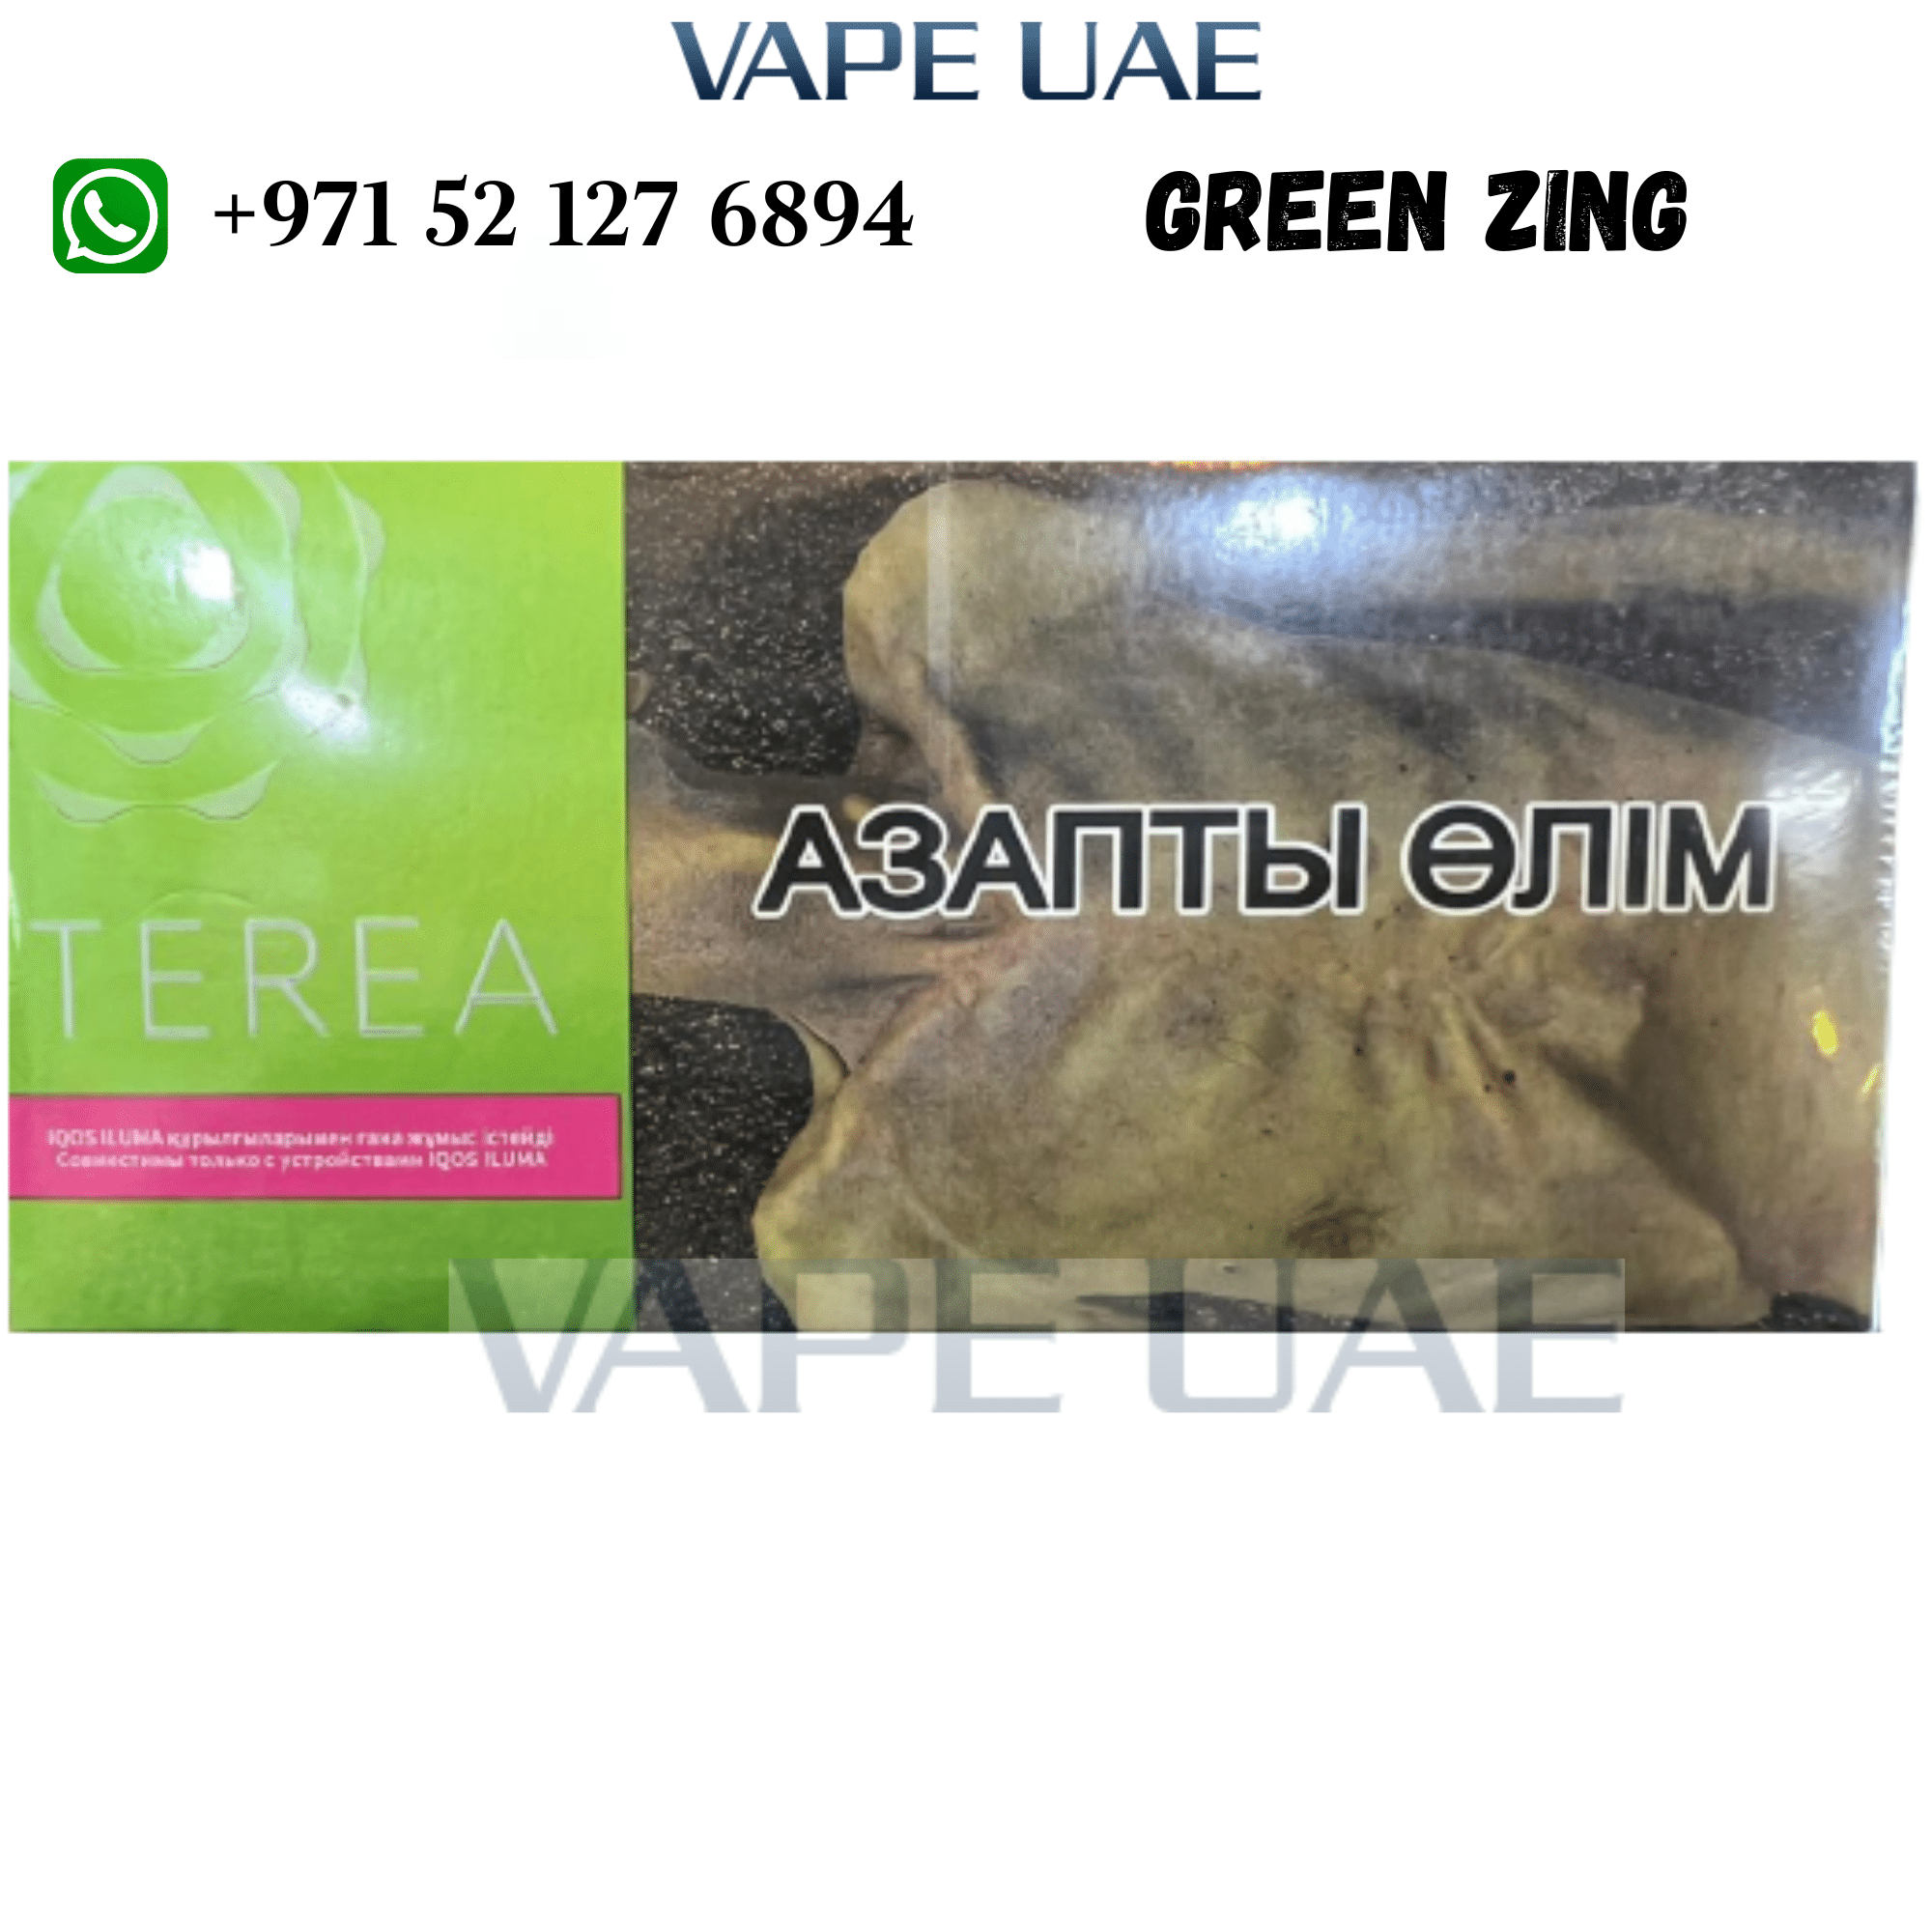 IQOS TEREA Green (Indonesia) in Dubai, UAE, Abu Dhabi, Sharjah